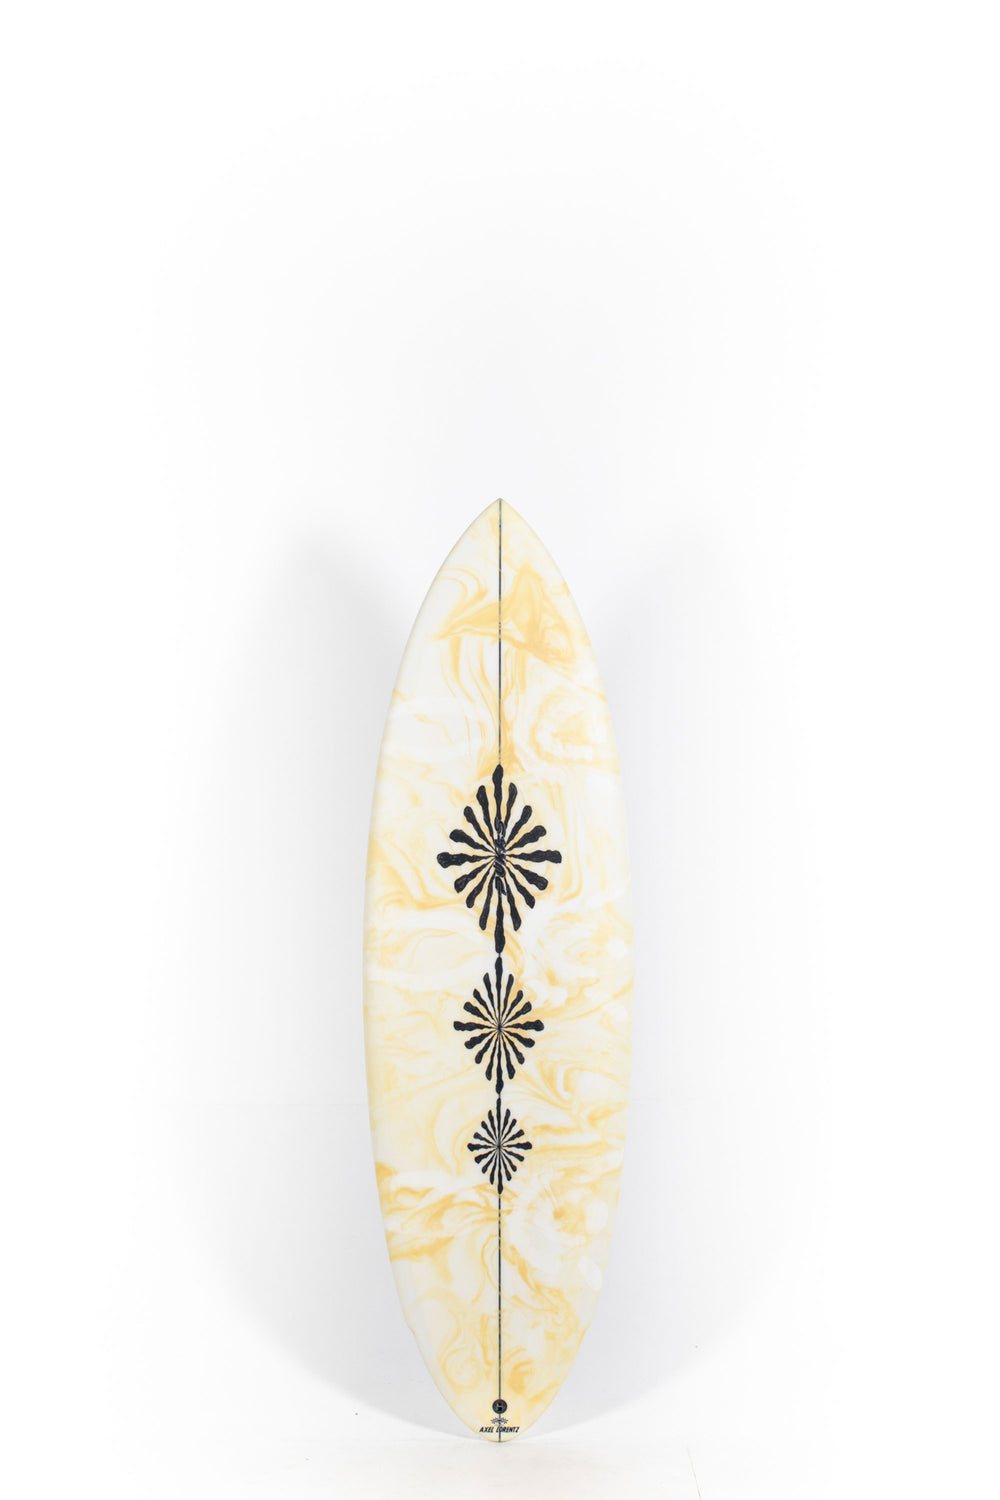 Pukas Surf Shop - Pukas Surfboards - ACID PLAN by Axel Lorentz - 5'9